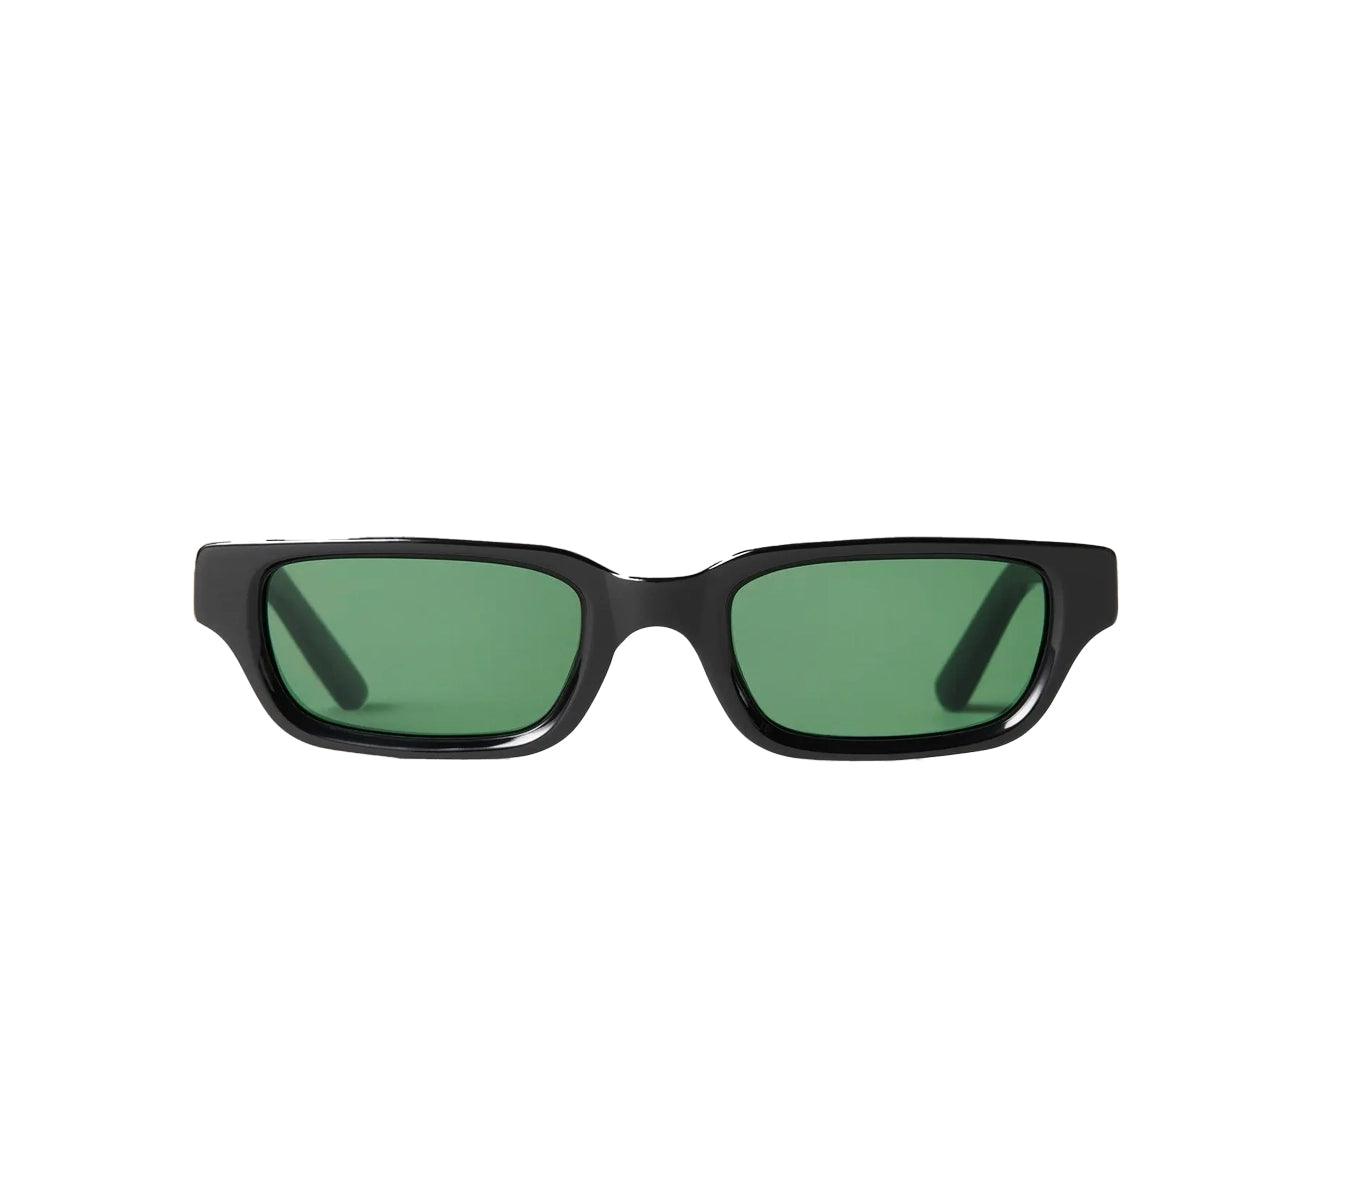 CHIMI Sting - Black / Green - One size - Sunglasses